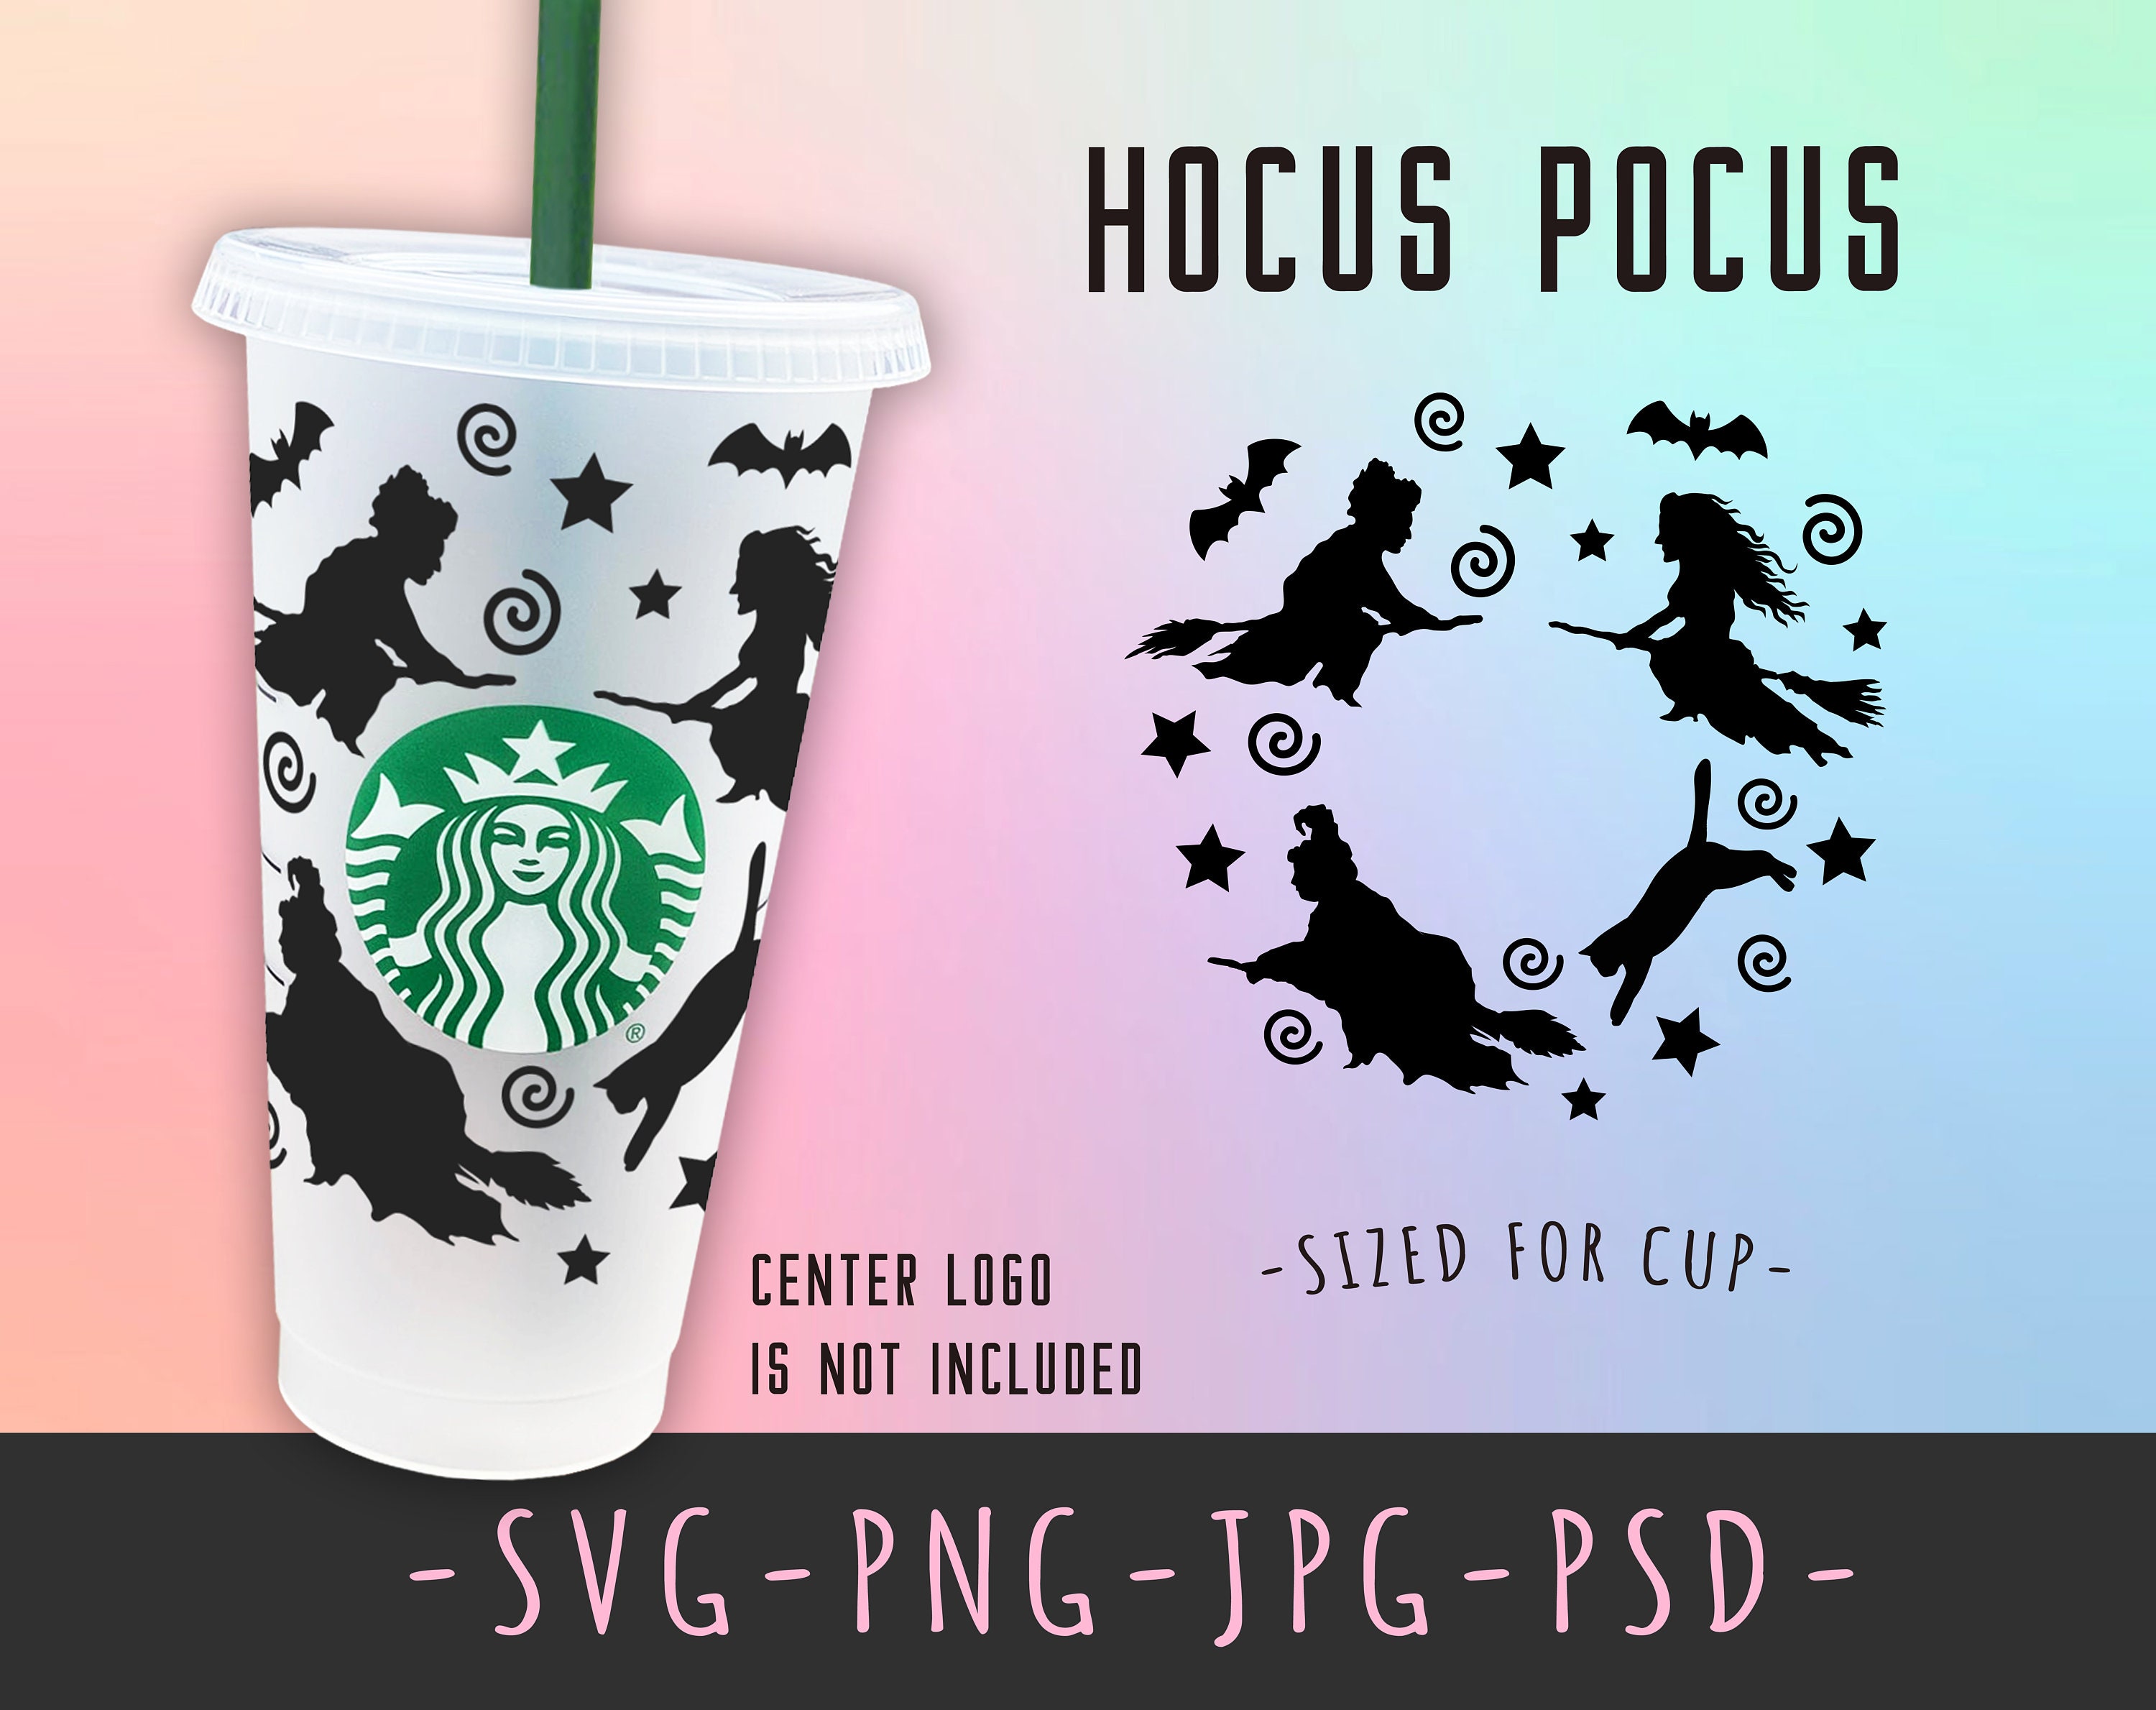 Personalized Starbucks Cold Cup Hocus Pocus.